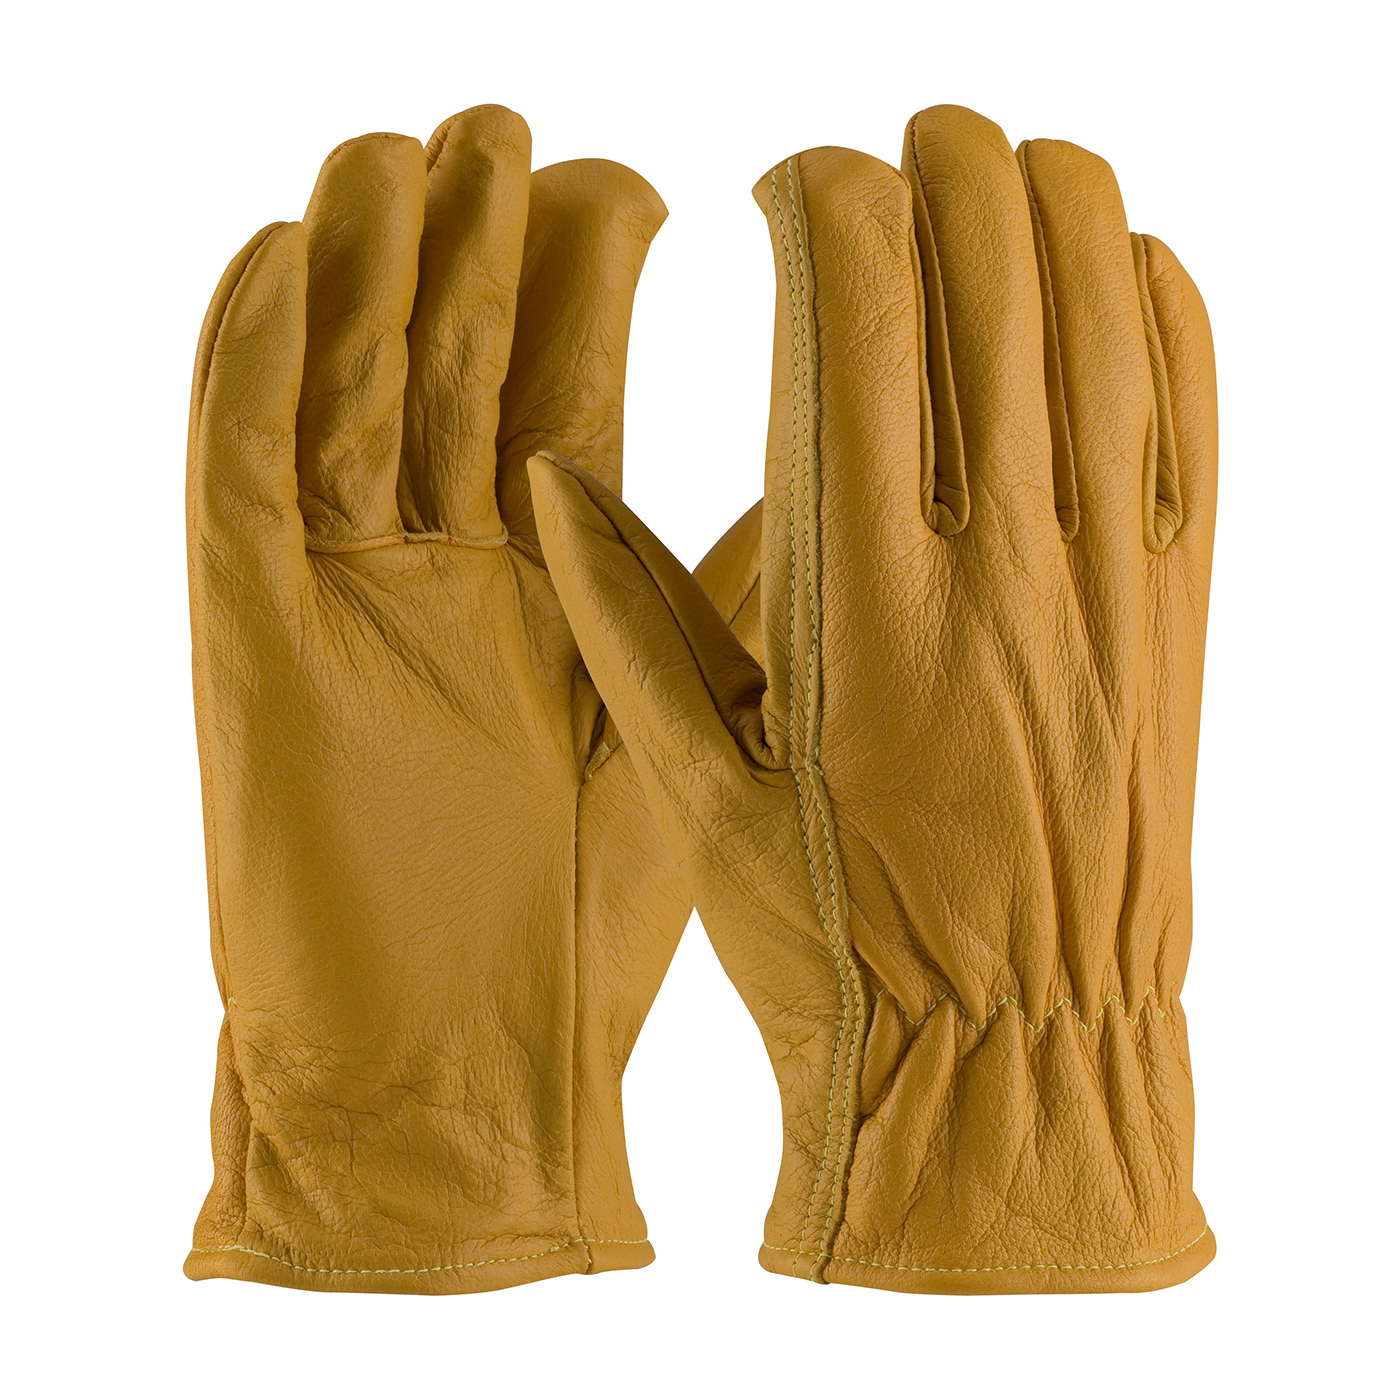 PIP 09-K3700/XL Kut Gard Top Grain Goatskin Leather Glove with Kevlar Liner - Light Weight - X-Large PID-09 K3700 XL